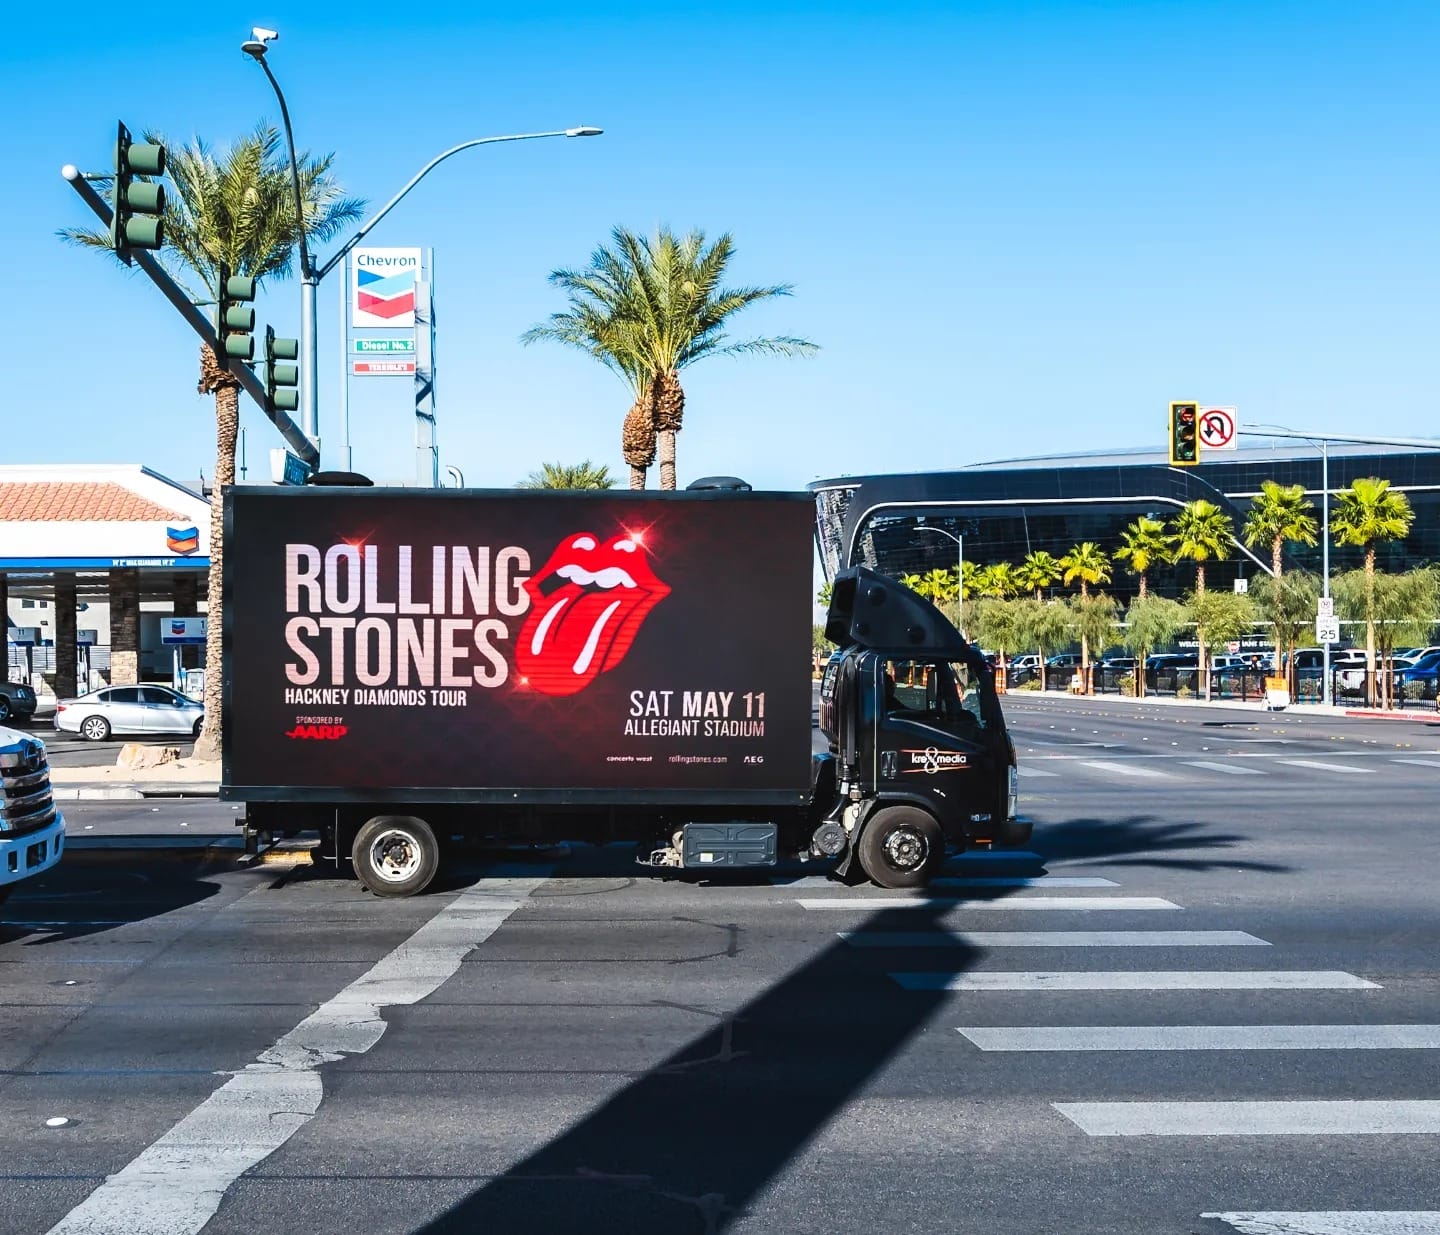 The Rolling Stones Hackney Diamonds Tour